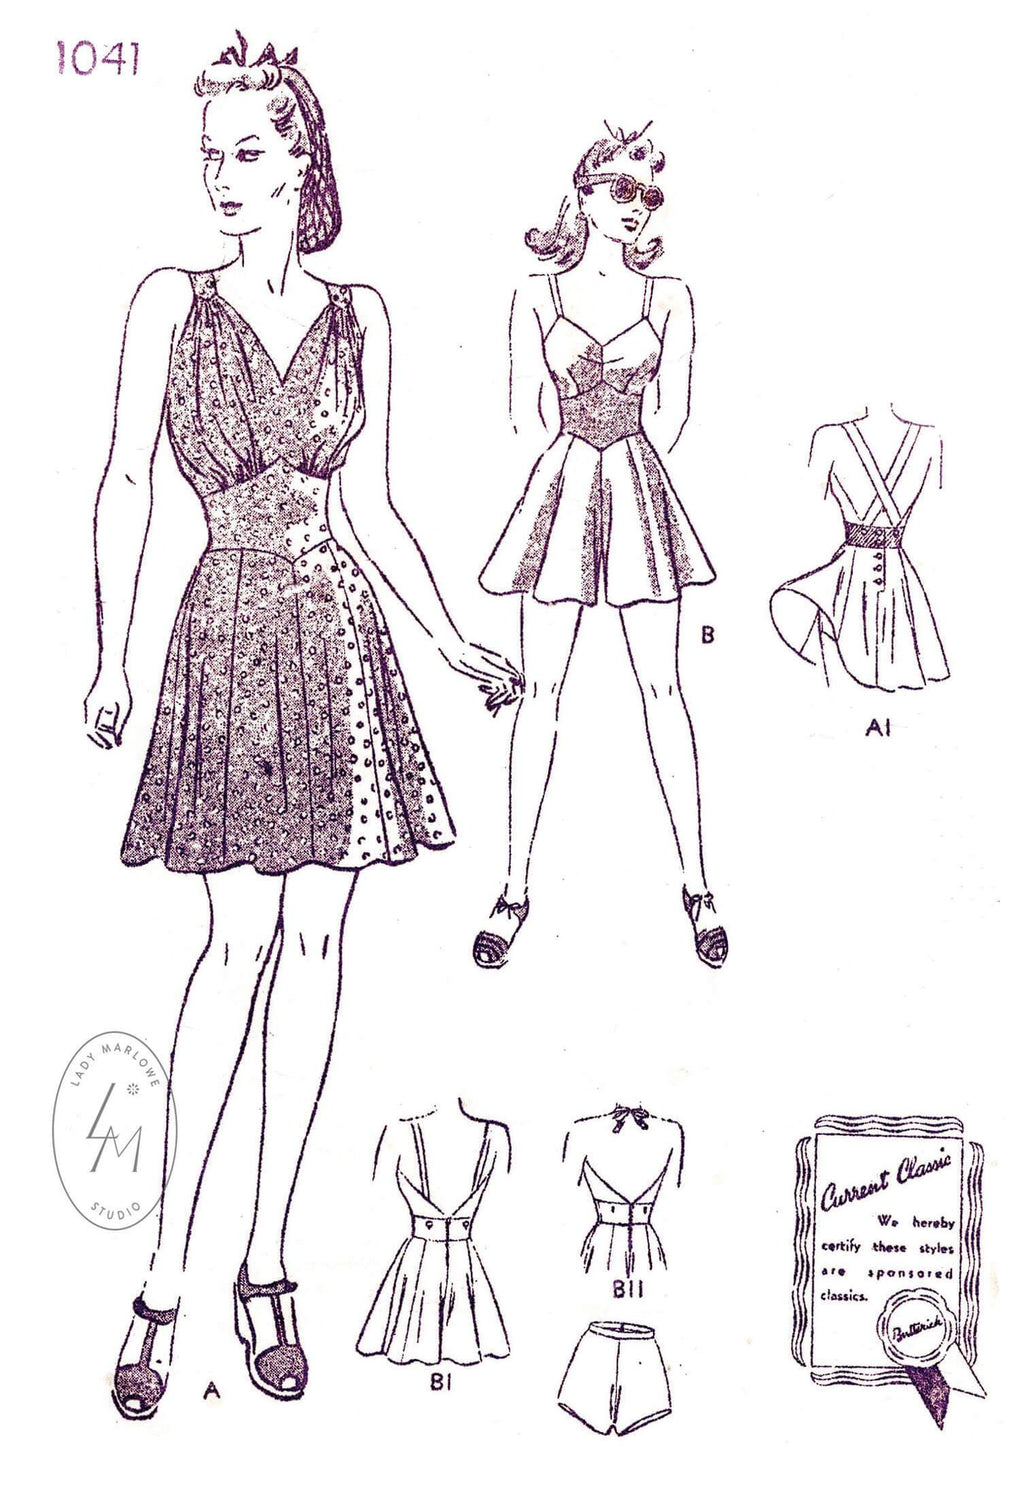 Butterick 1041 1940s beachwear playsuit flounce hem skater skirt or shorts vintage sewing pattern reproduction